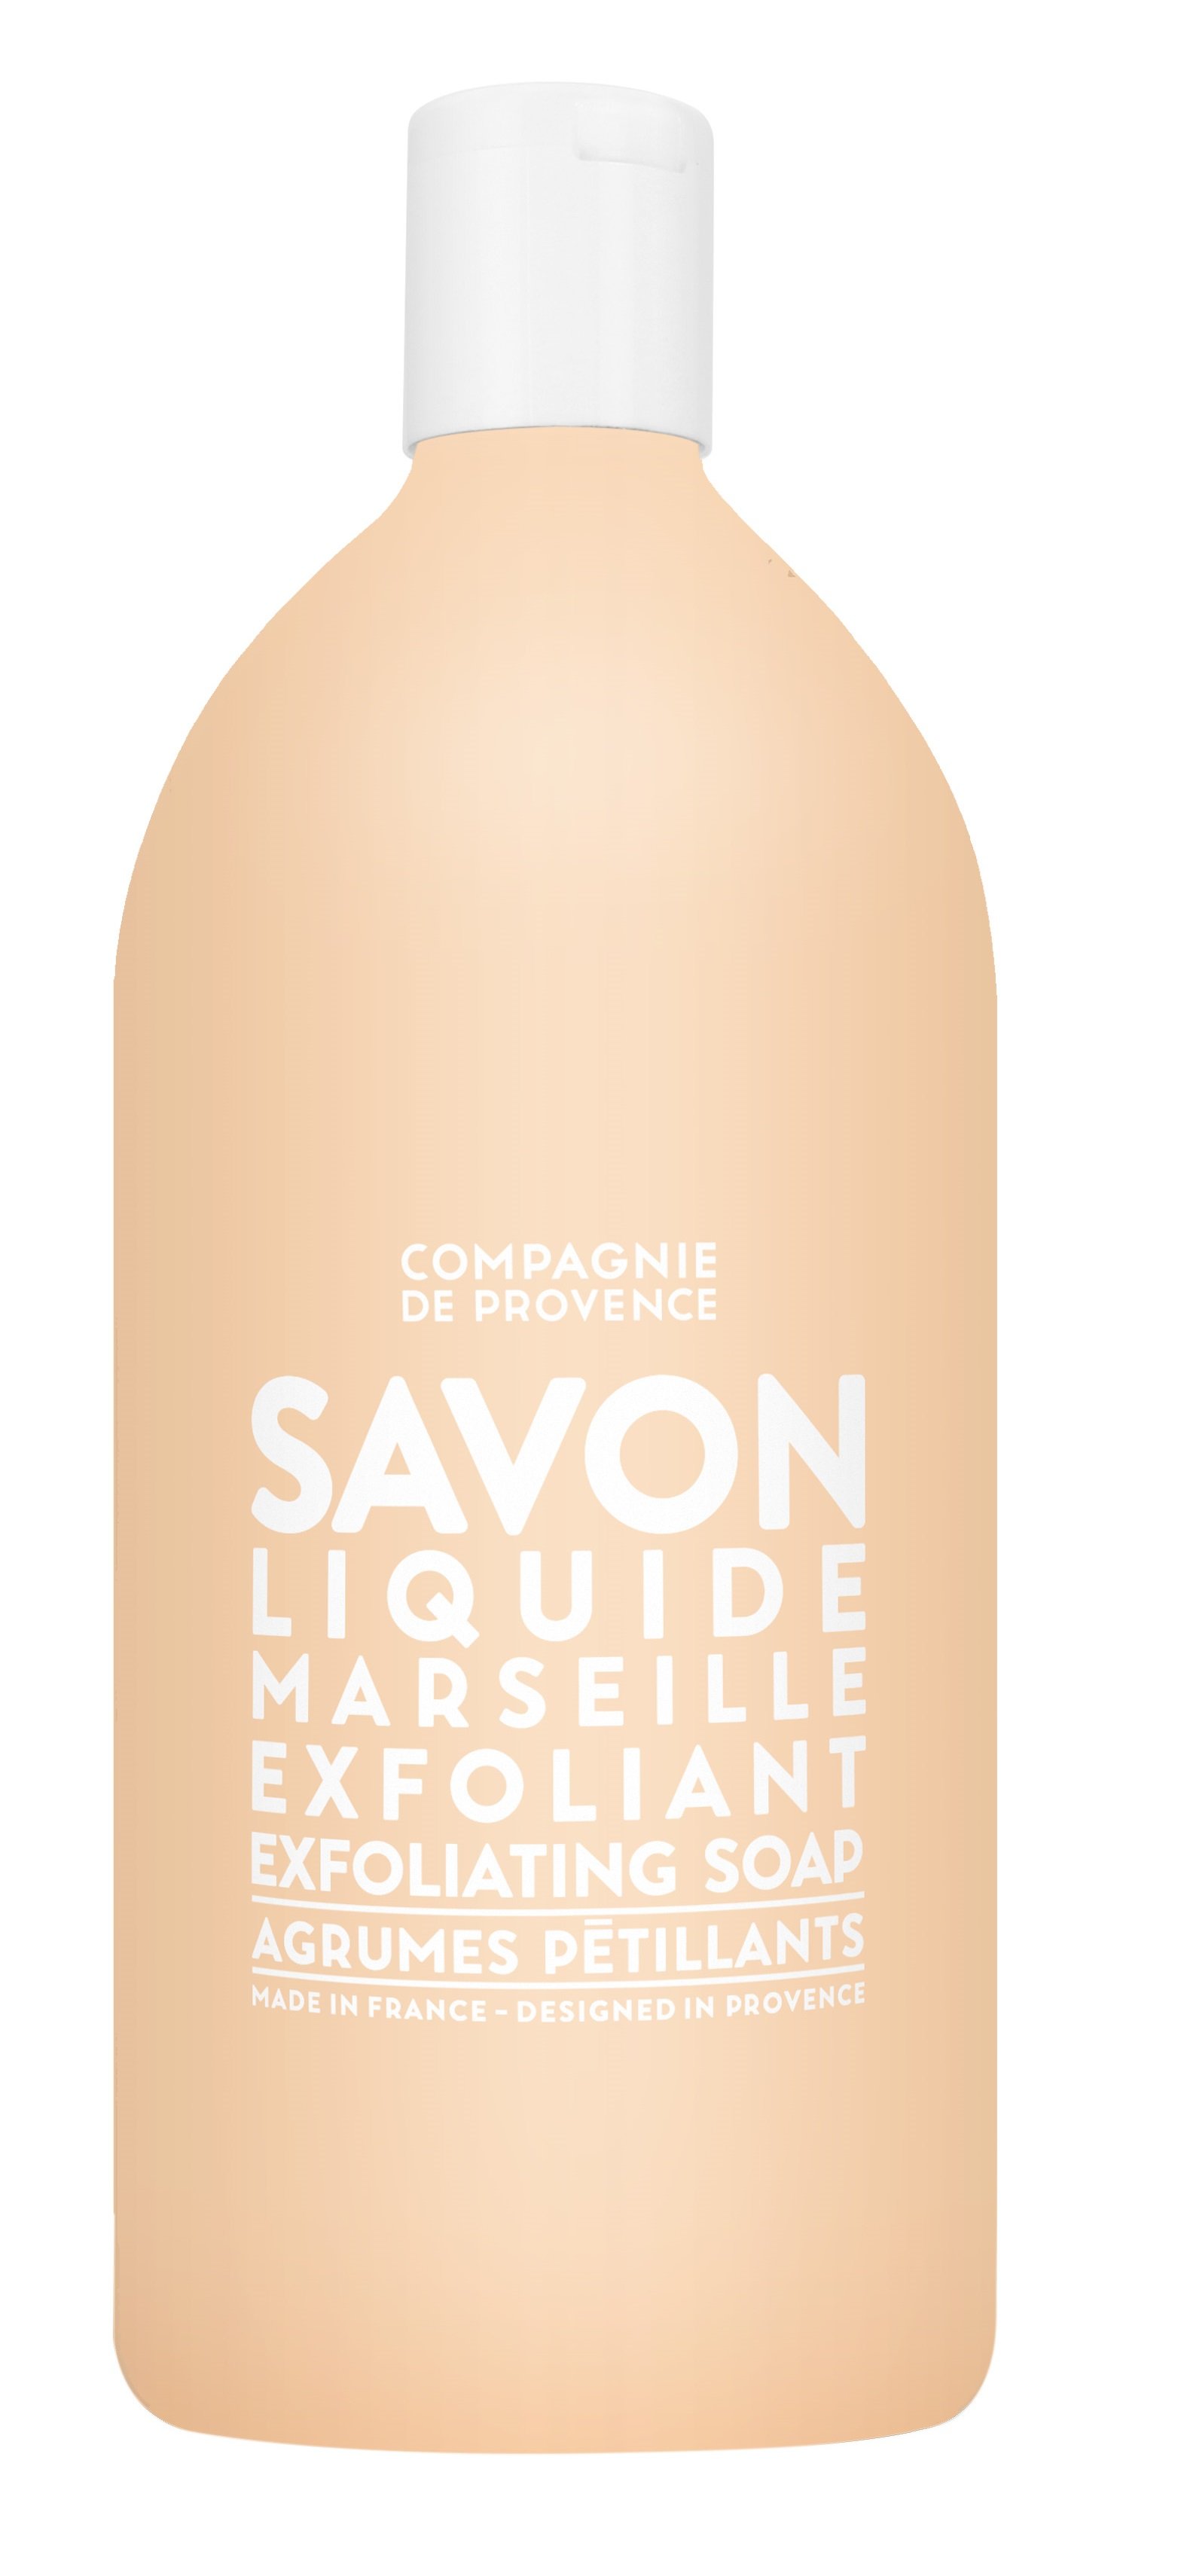 COMPAGNIE DE PROVENCE - Exfoliating Liquid Marseille Soap Refill 1000 ml - Skjønnhet